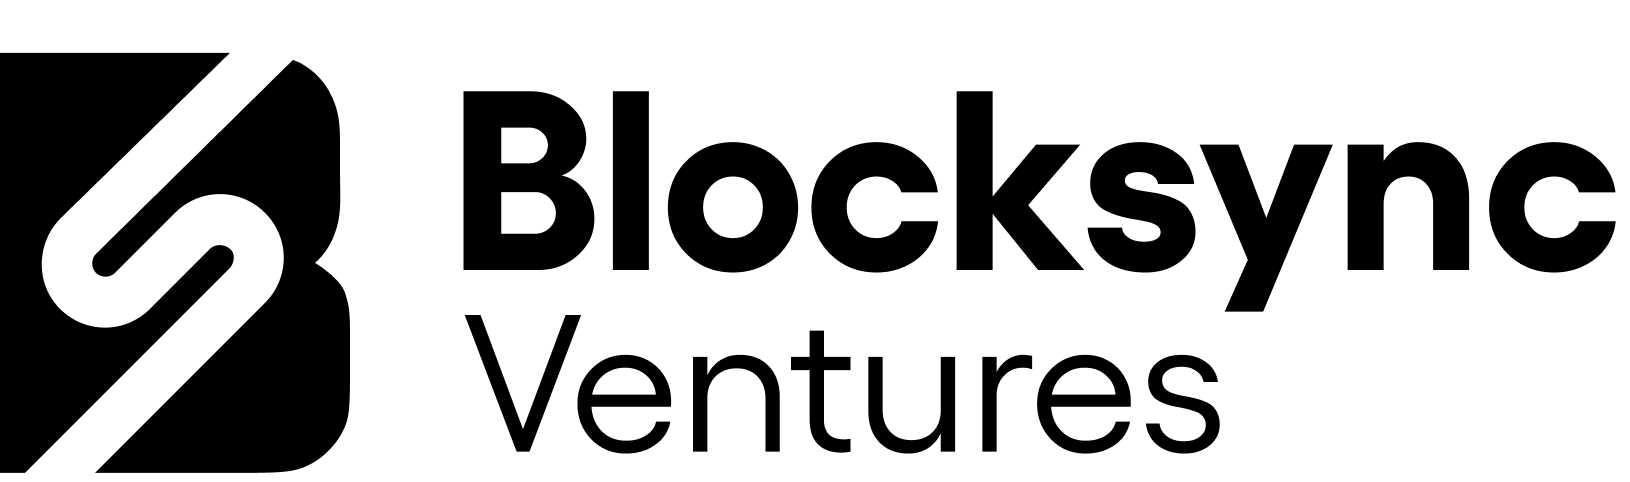 icon logo black